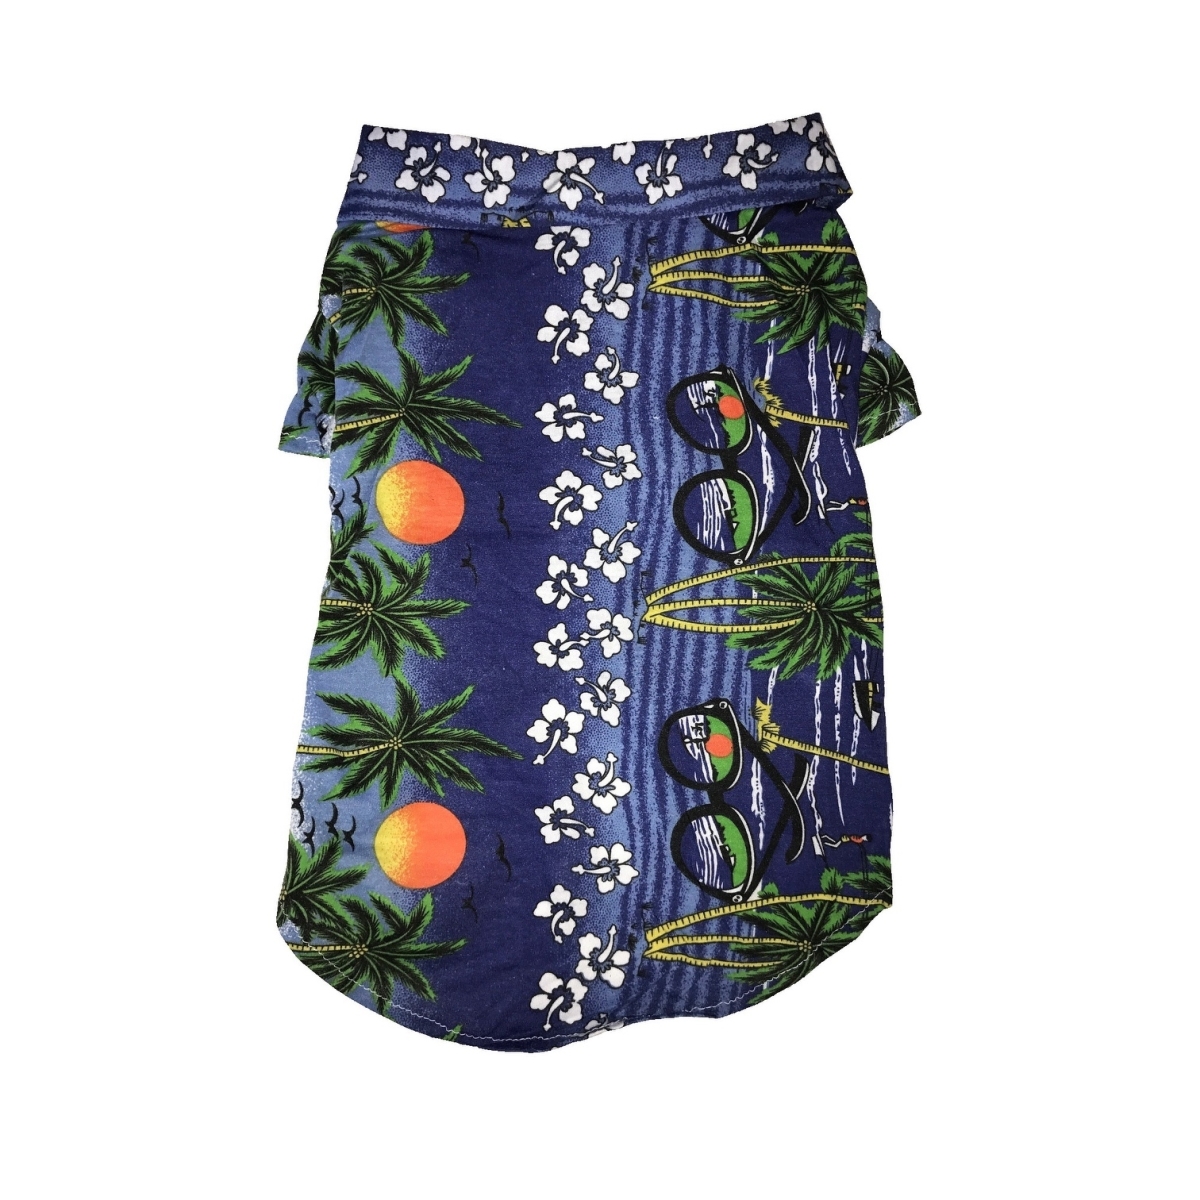 Dghawaii-xs Maui Shirt, Multi - Extra Small